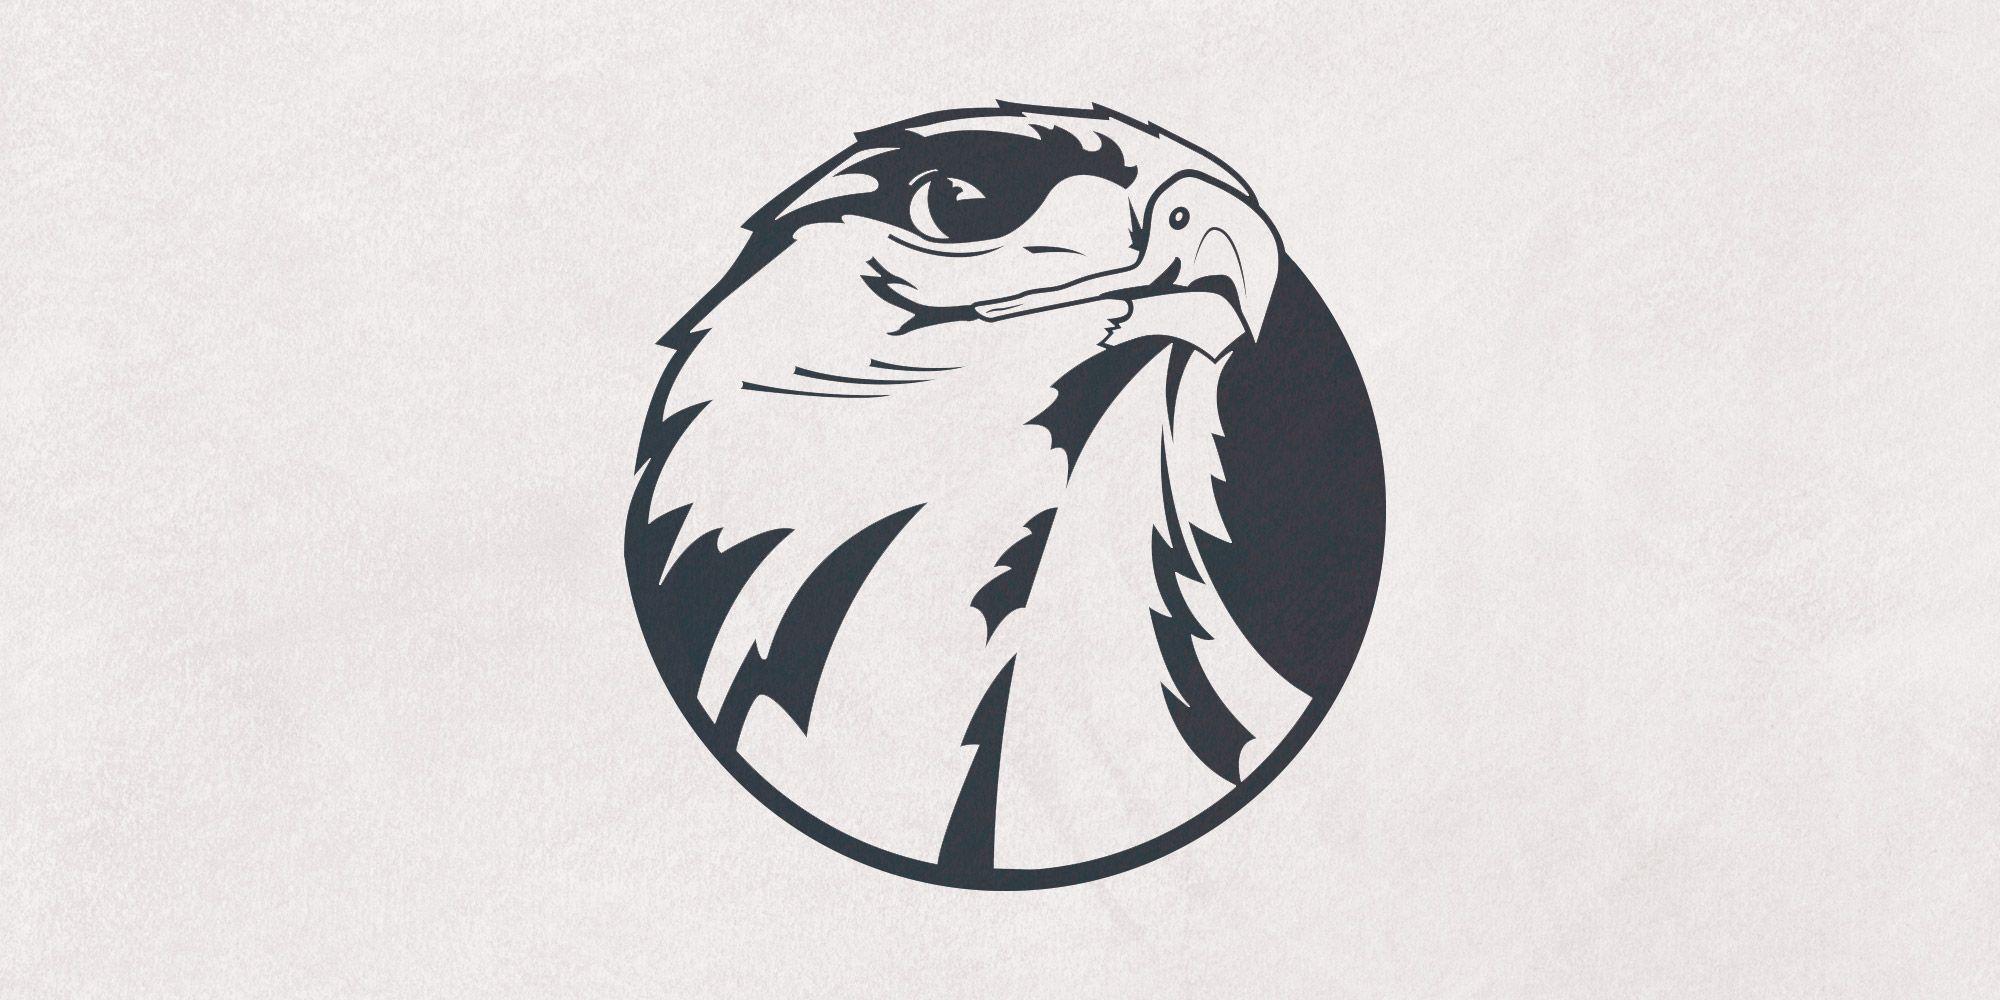 Hawks Mascot Logo - Mascot design for a high school